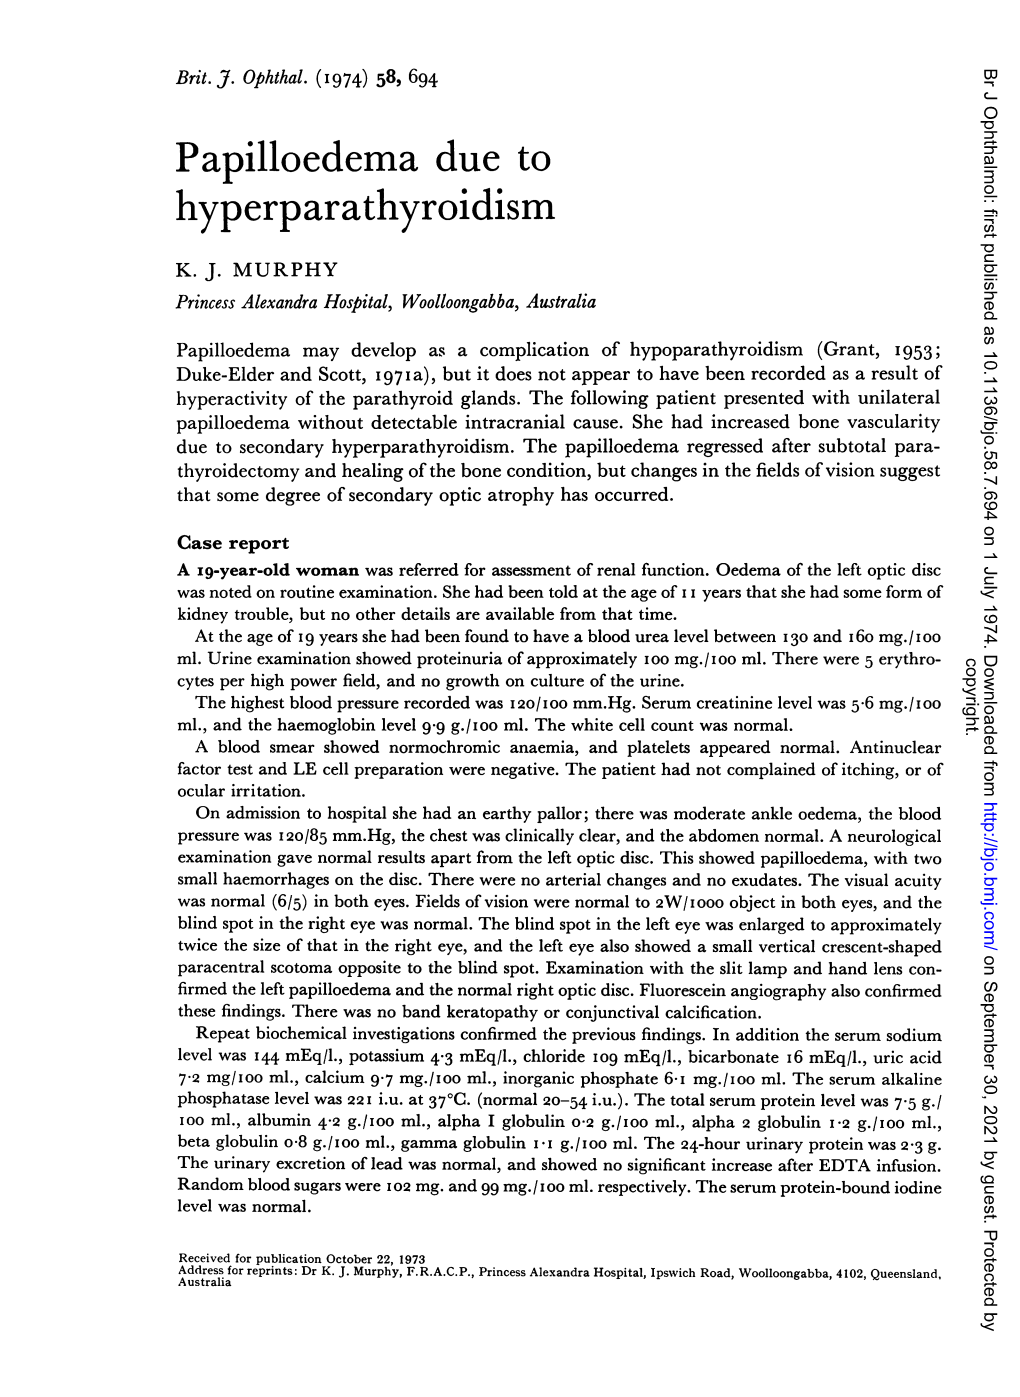 Papilloedema Due to Hyperparathyroidism